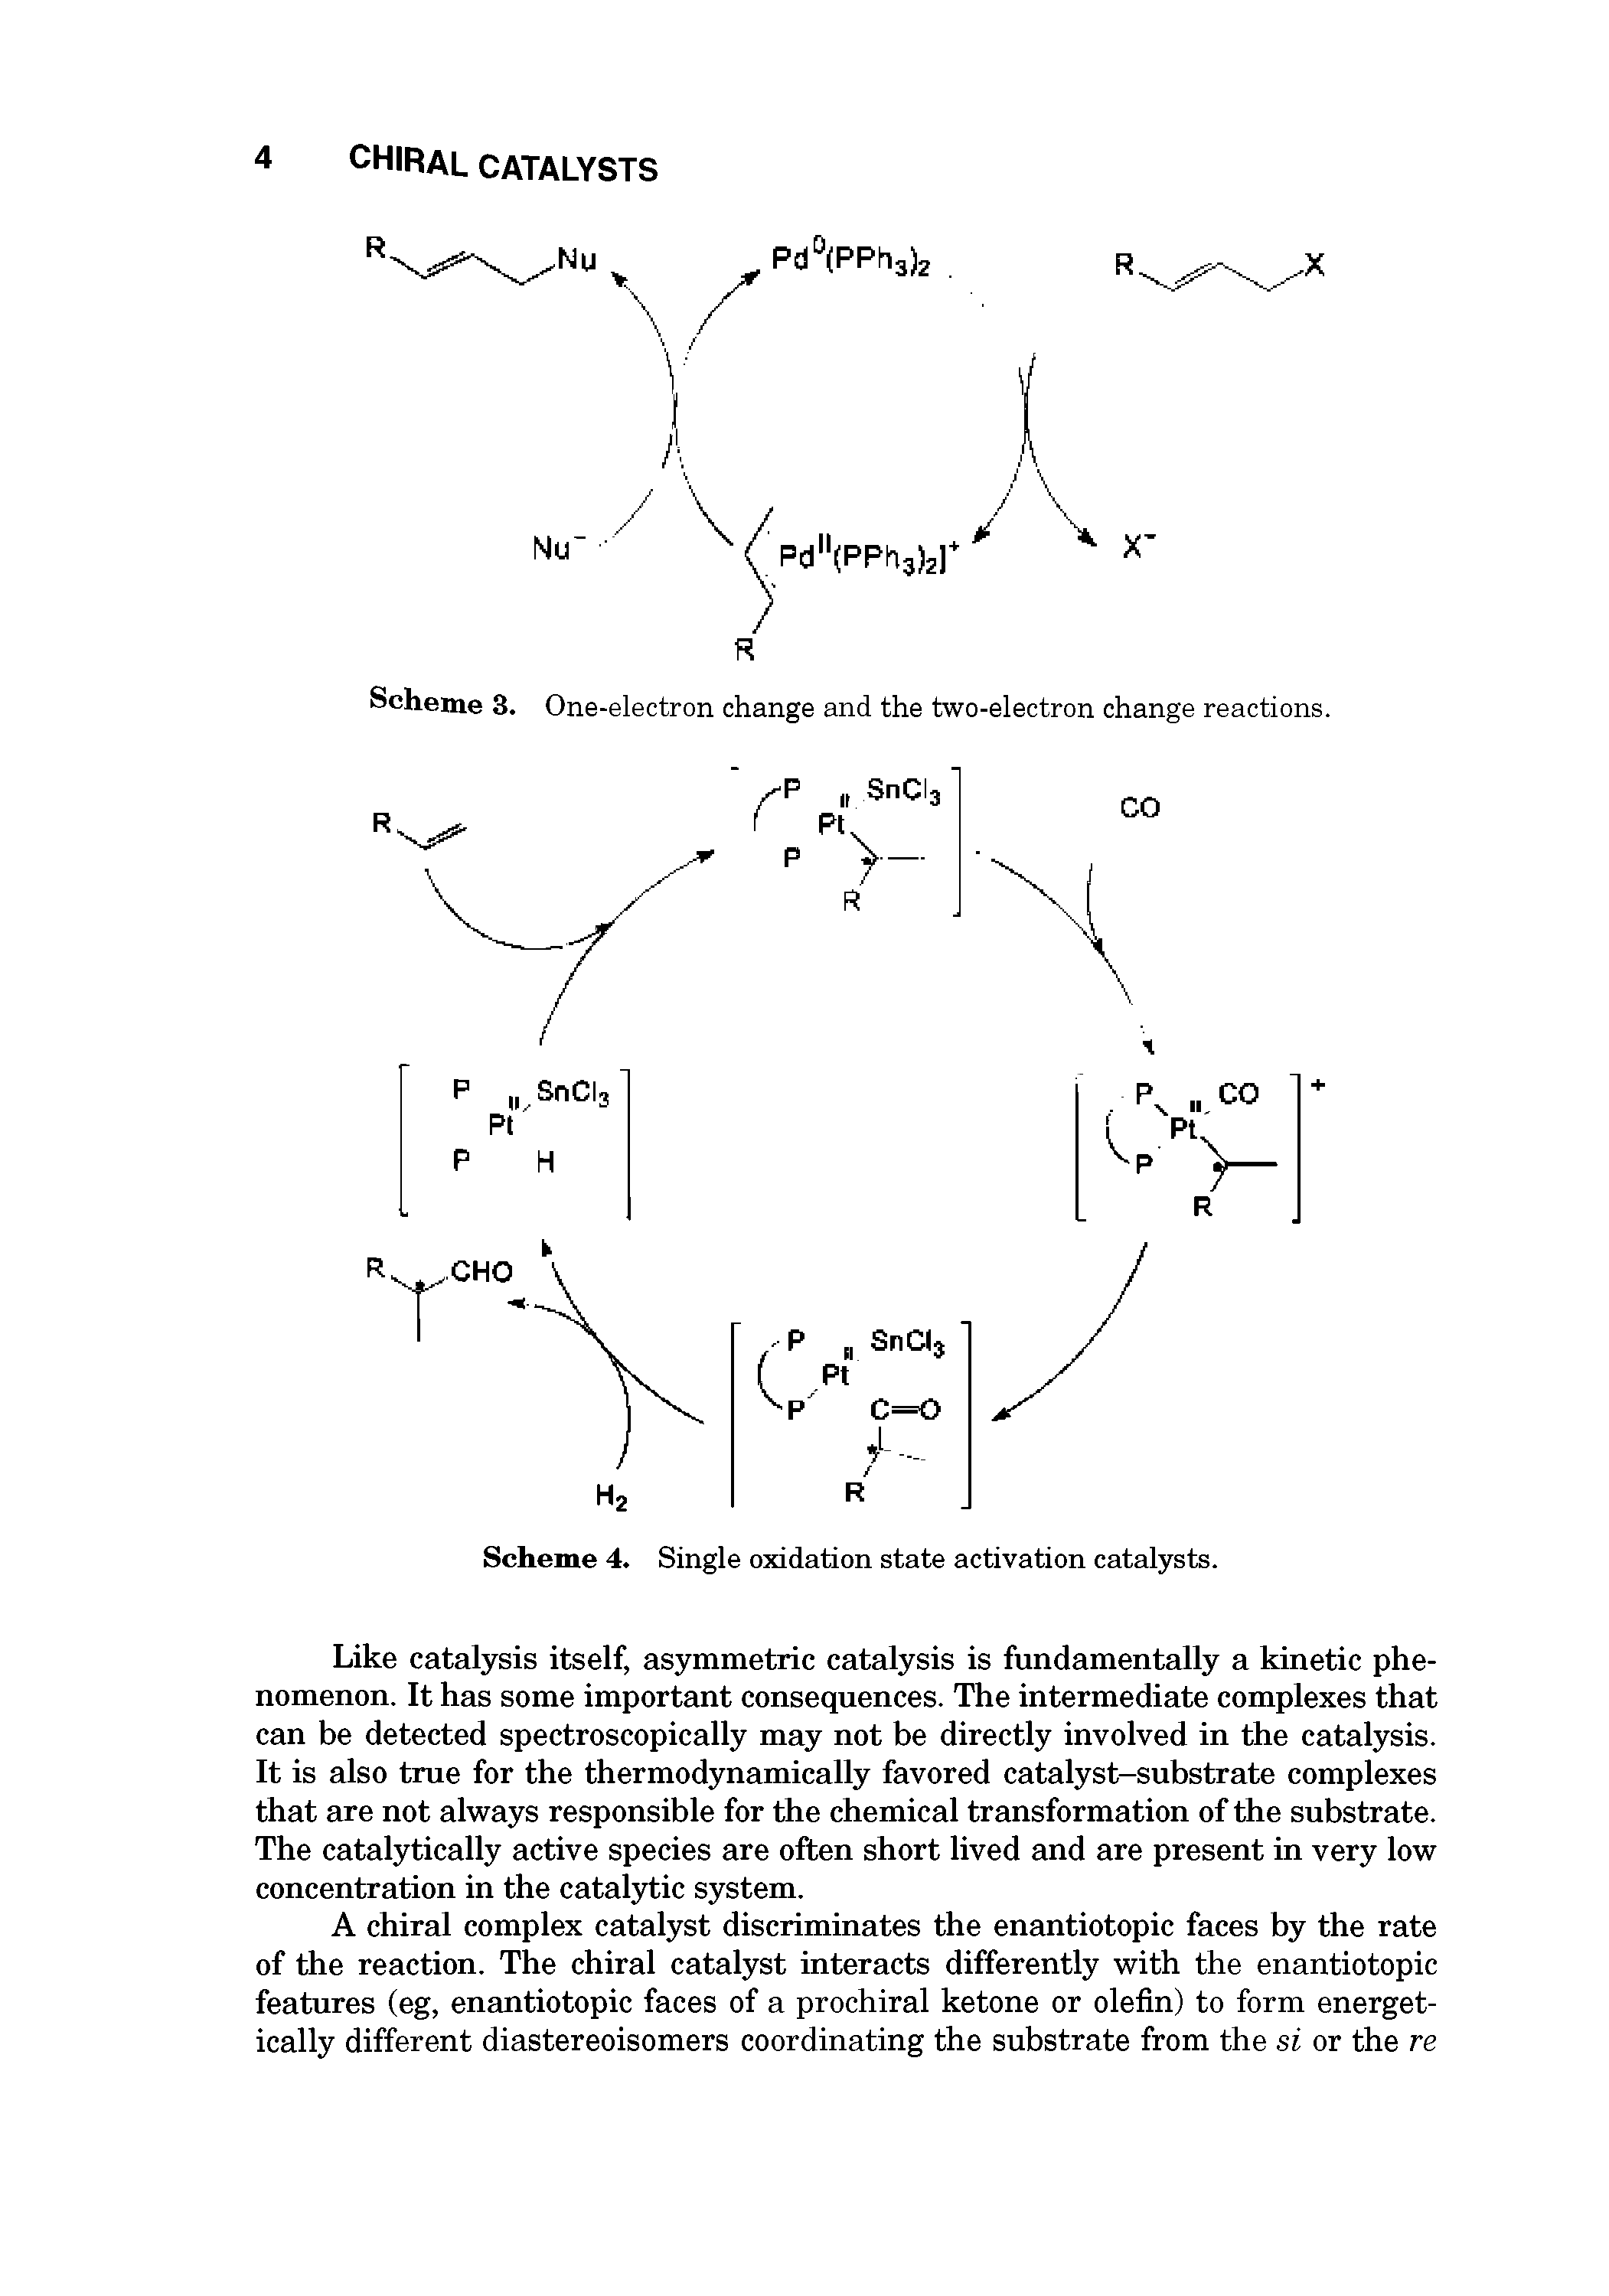 Scheme 4. Single oxidation state activation catalysts.